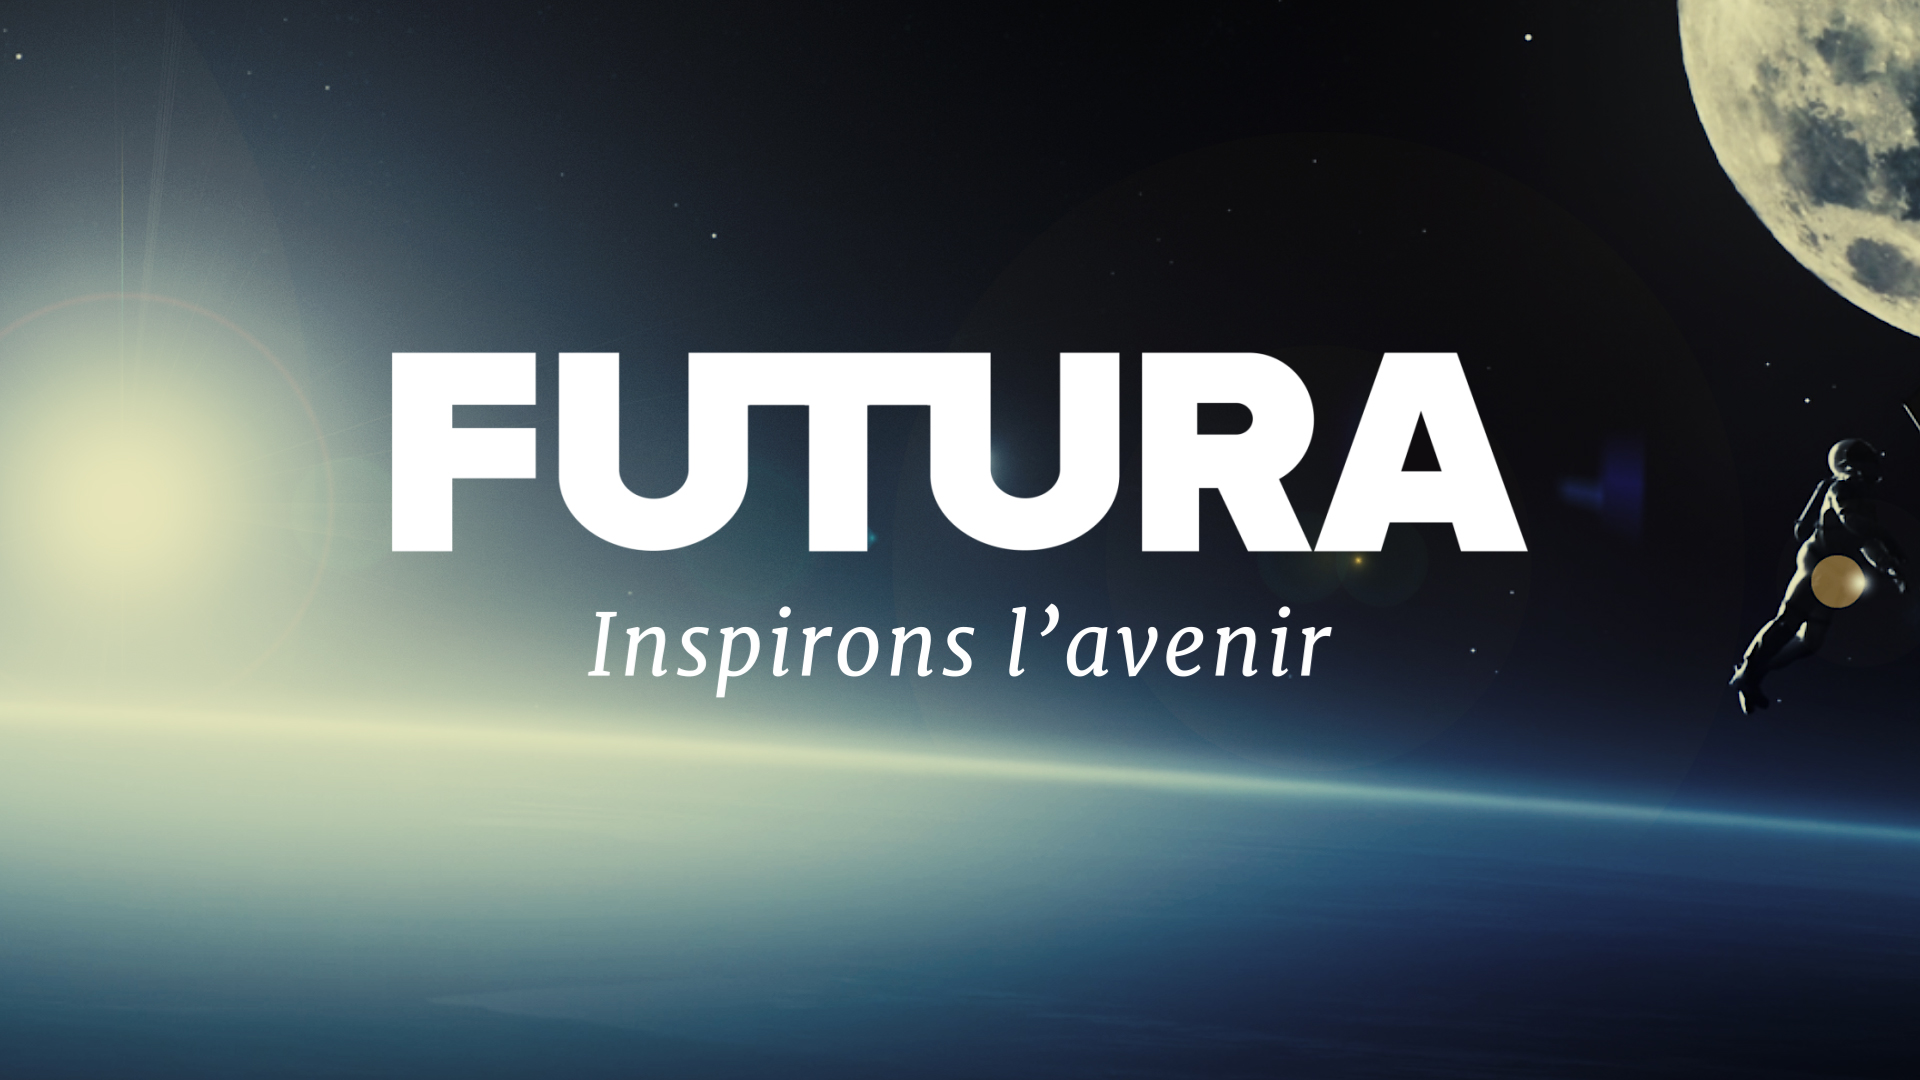 Futura, inspirons l'avenir.